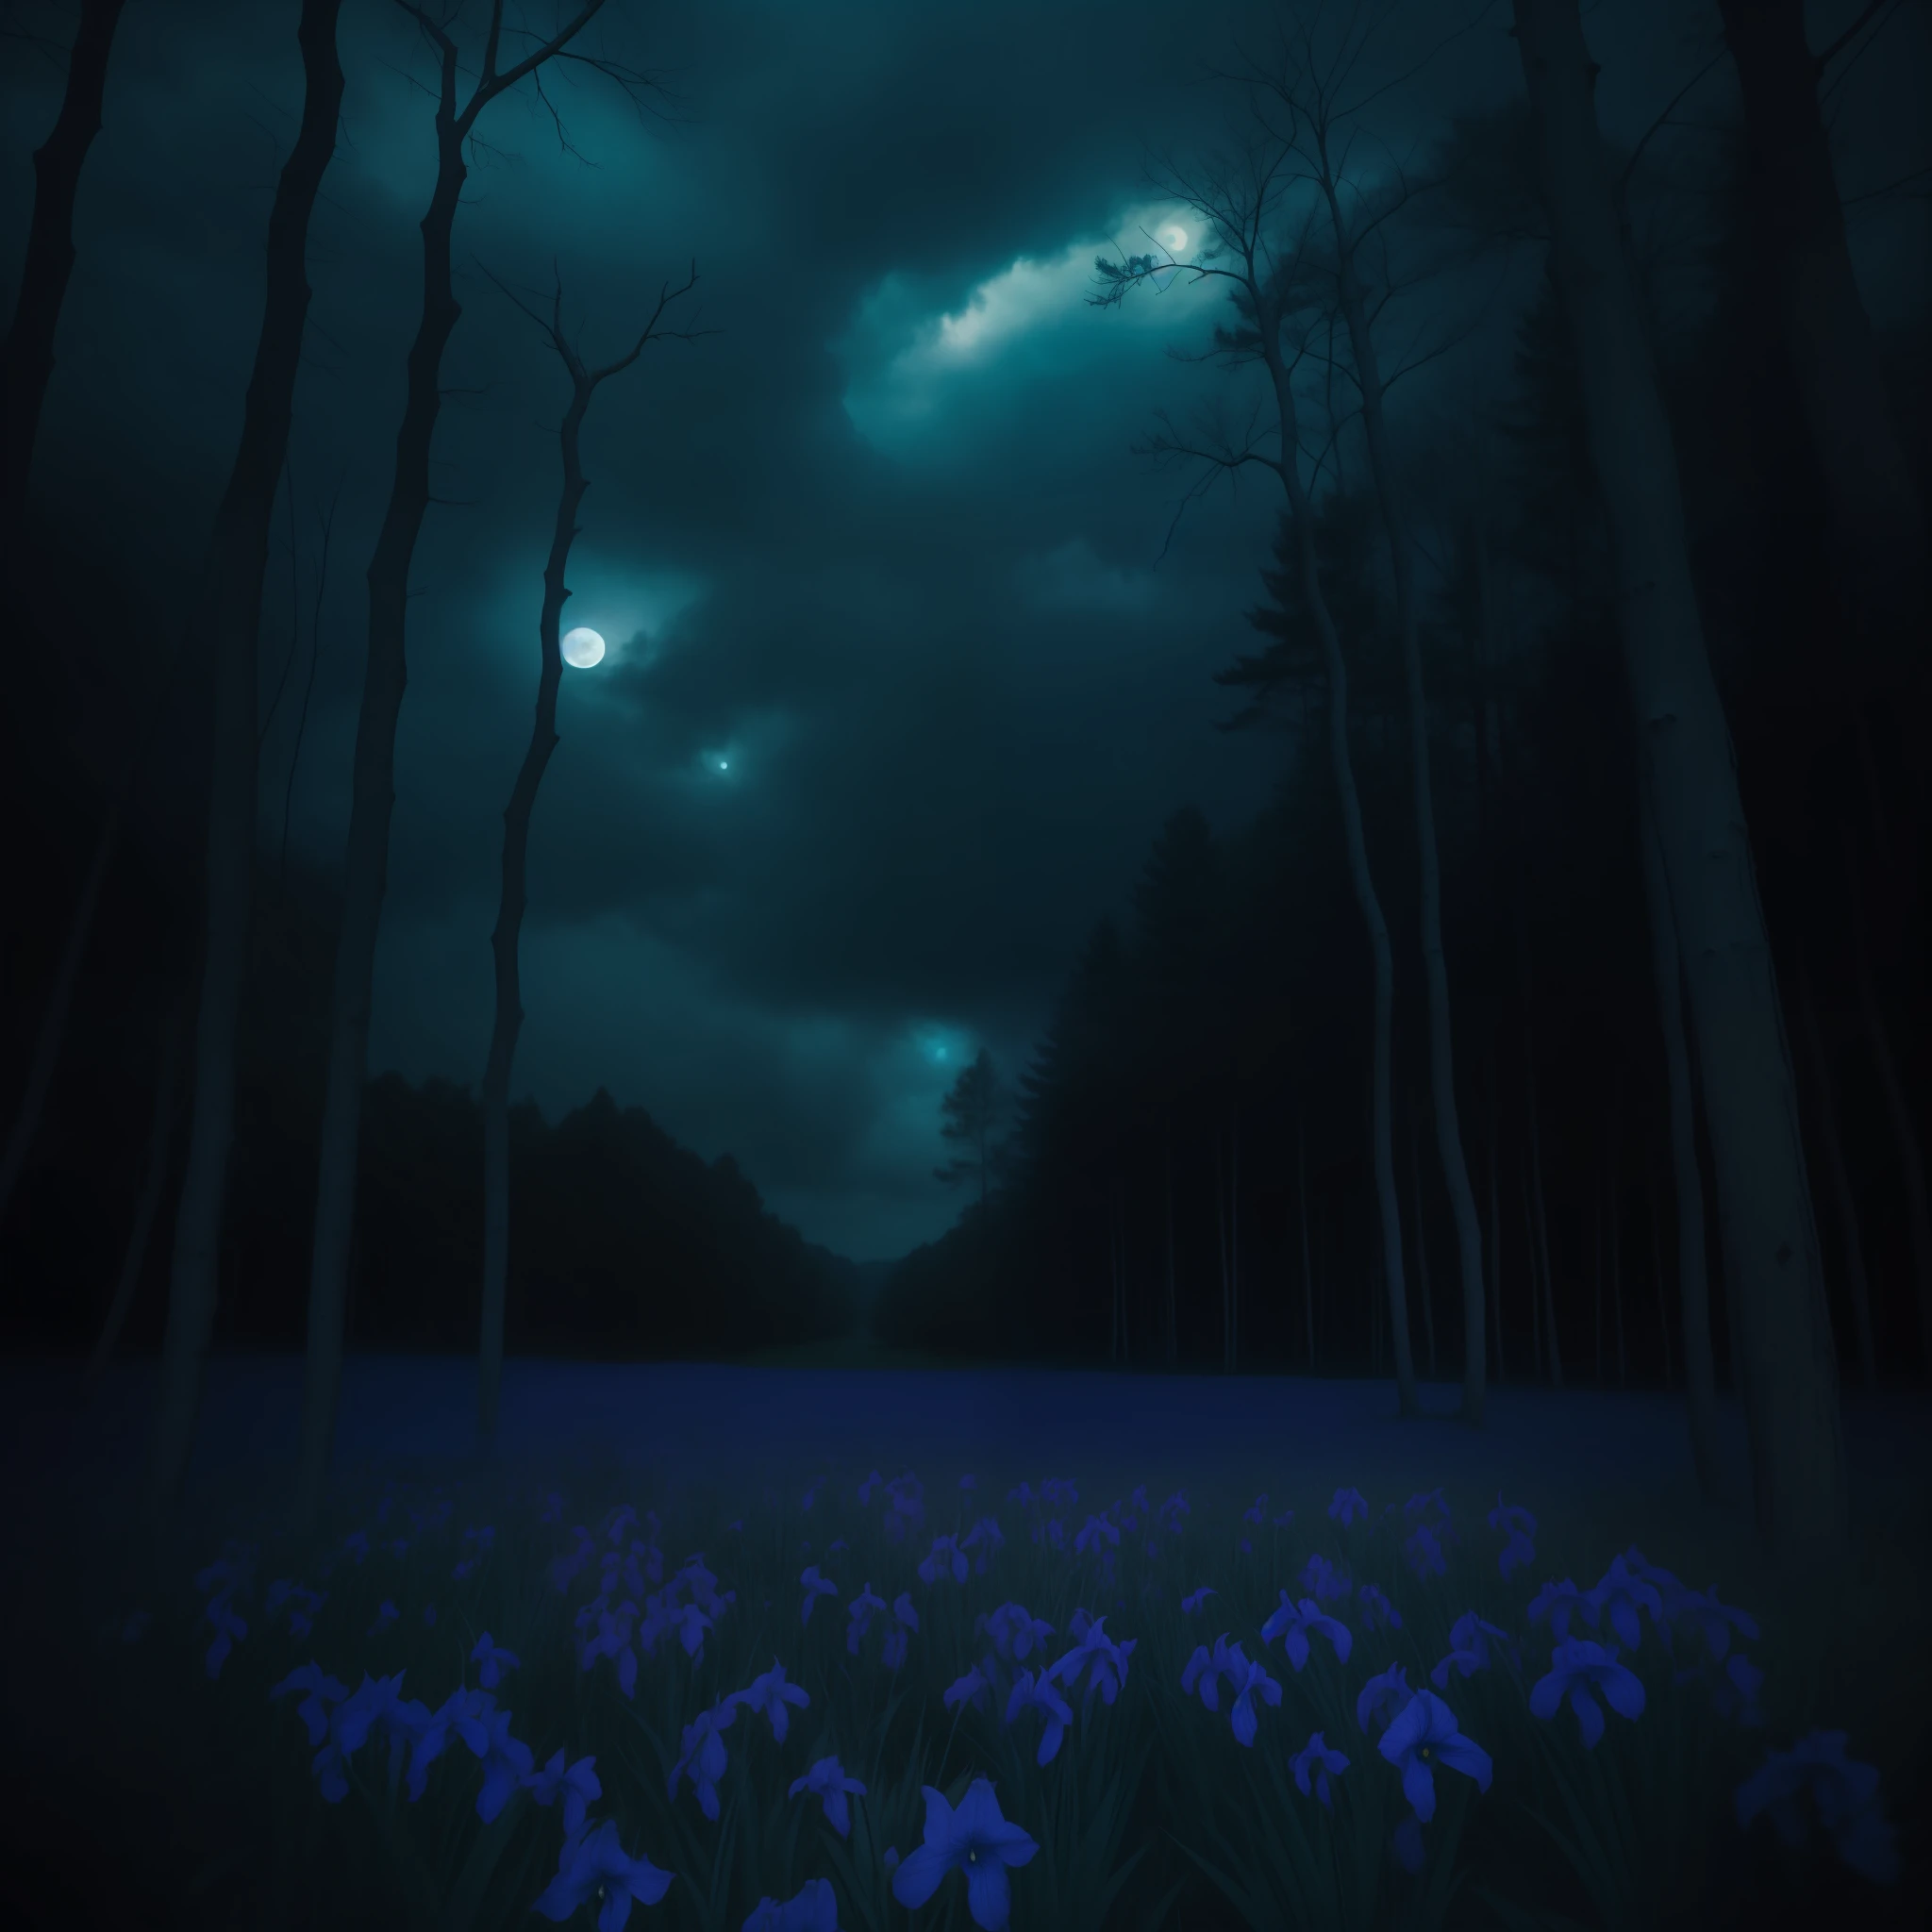 Blue iris color filter, pretty haunting landscape